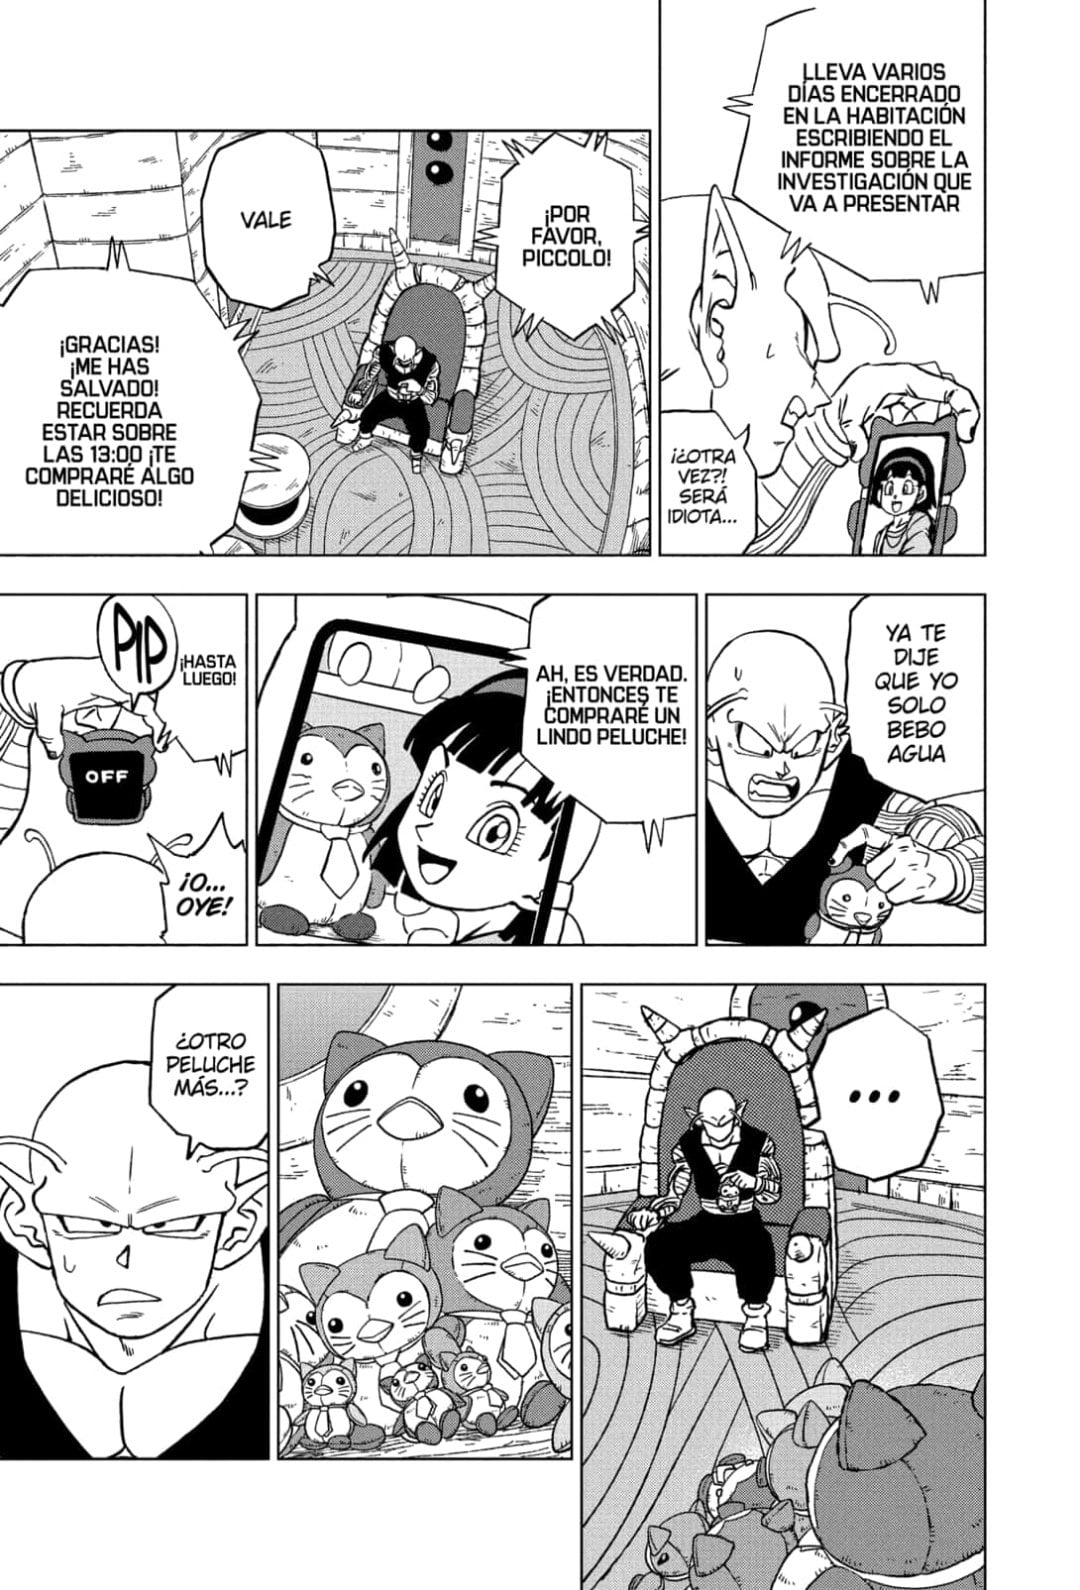 Daiko O Saiyajin on X: Mais imagens do capítulo 91 do mangá de Dragon Ball  Super! O início do arco Super Hero! Kuririn perdeu pro Hachimaru😂 1/3   / X